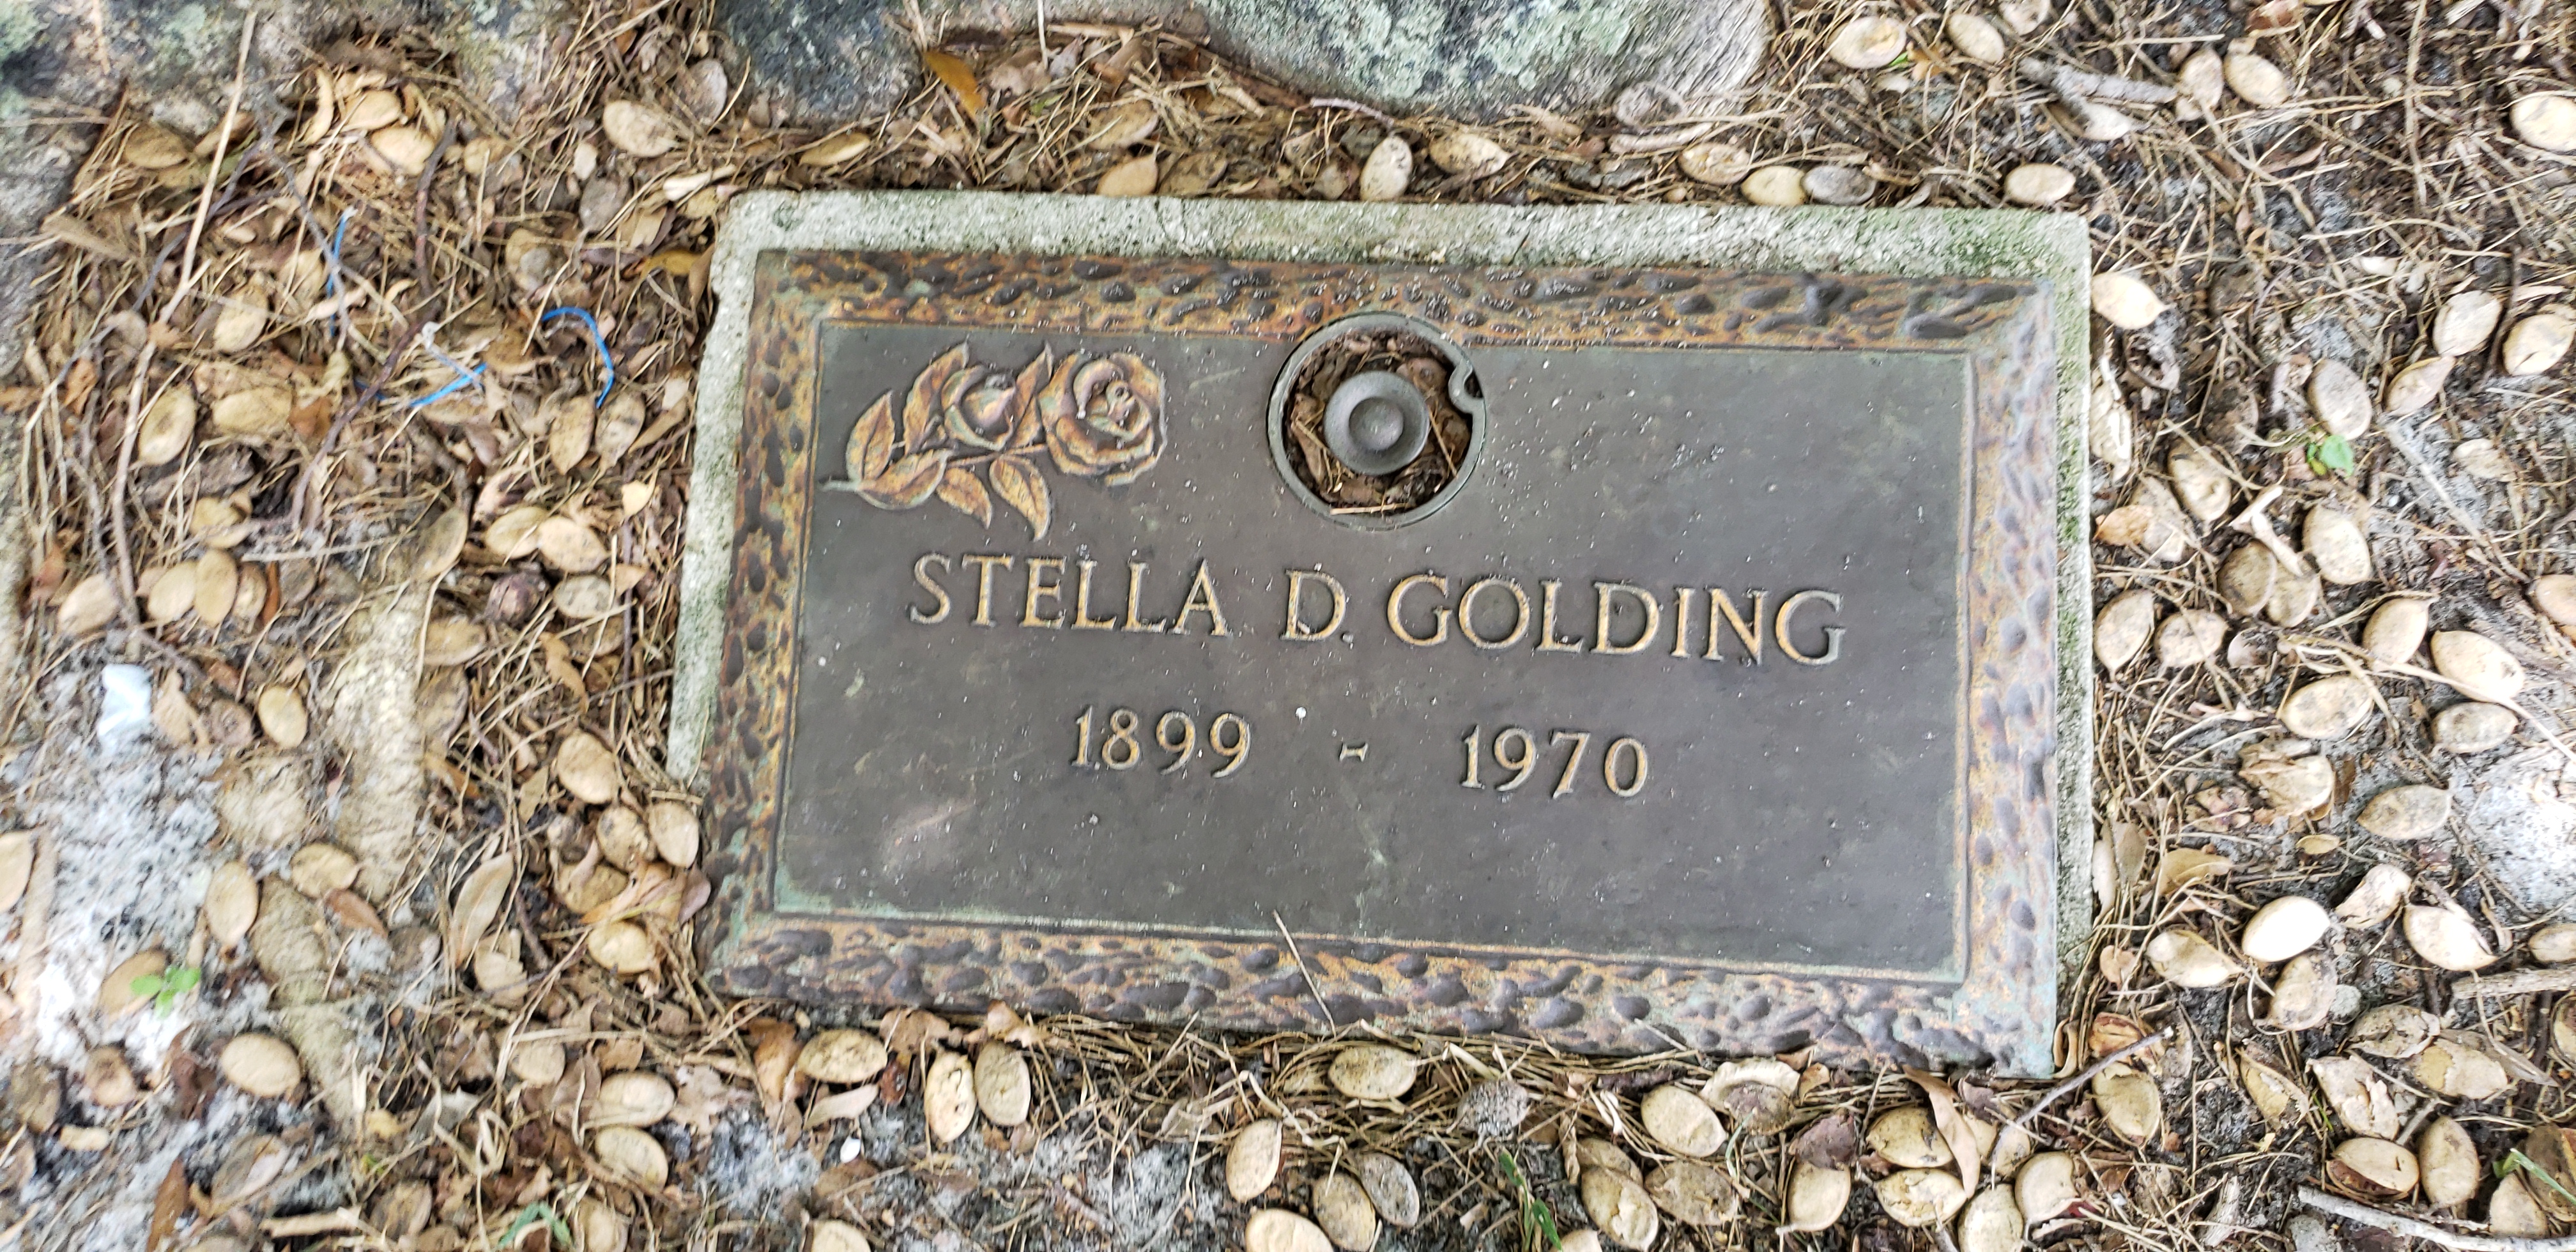 Stella D Golding